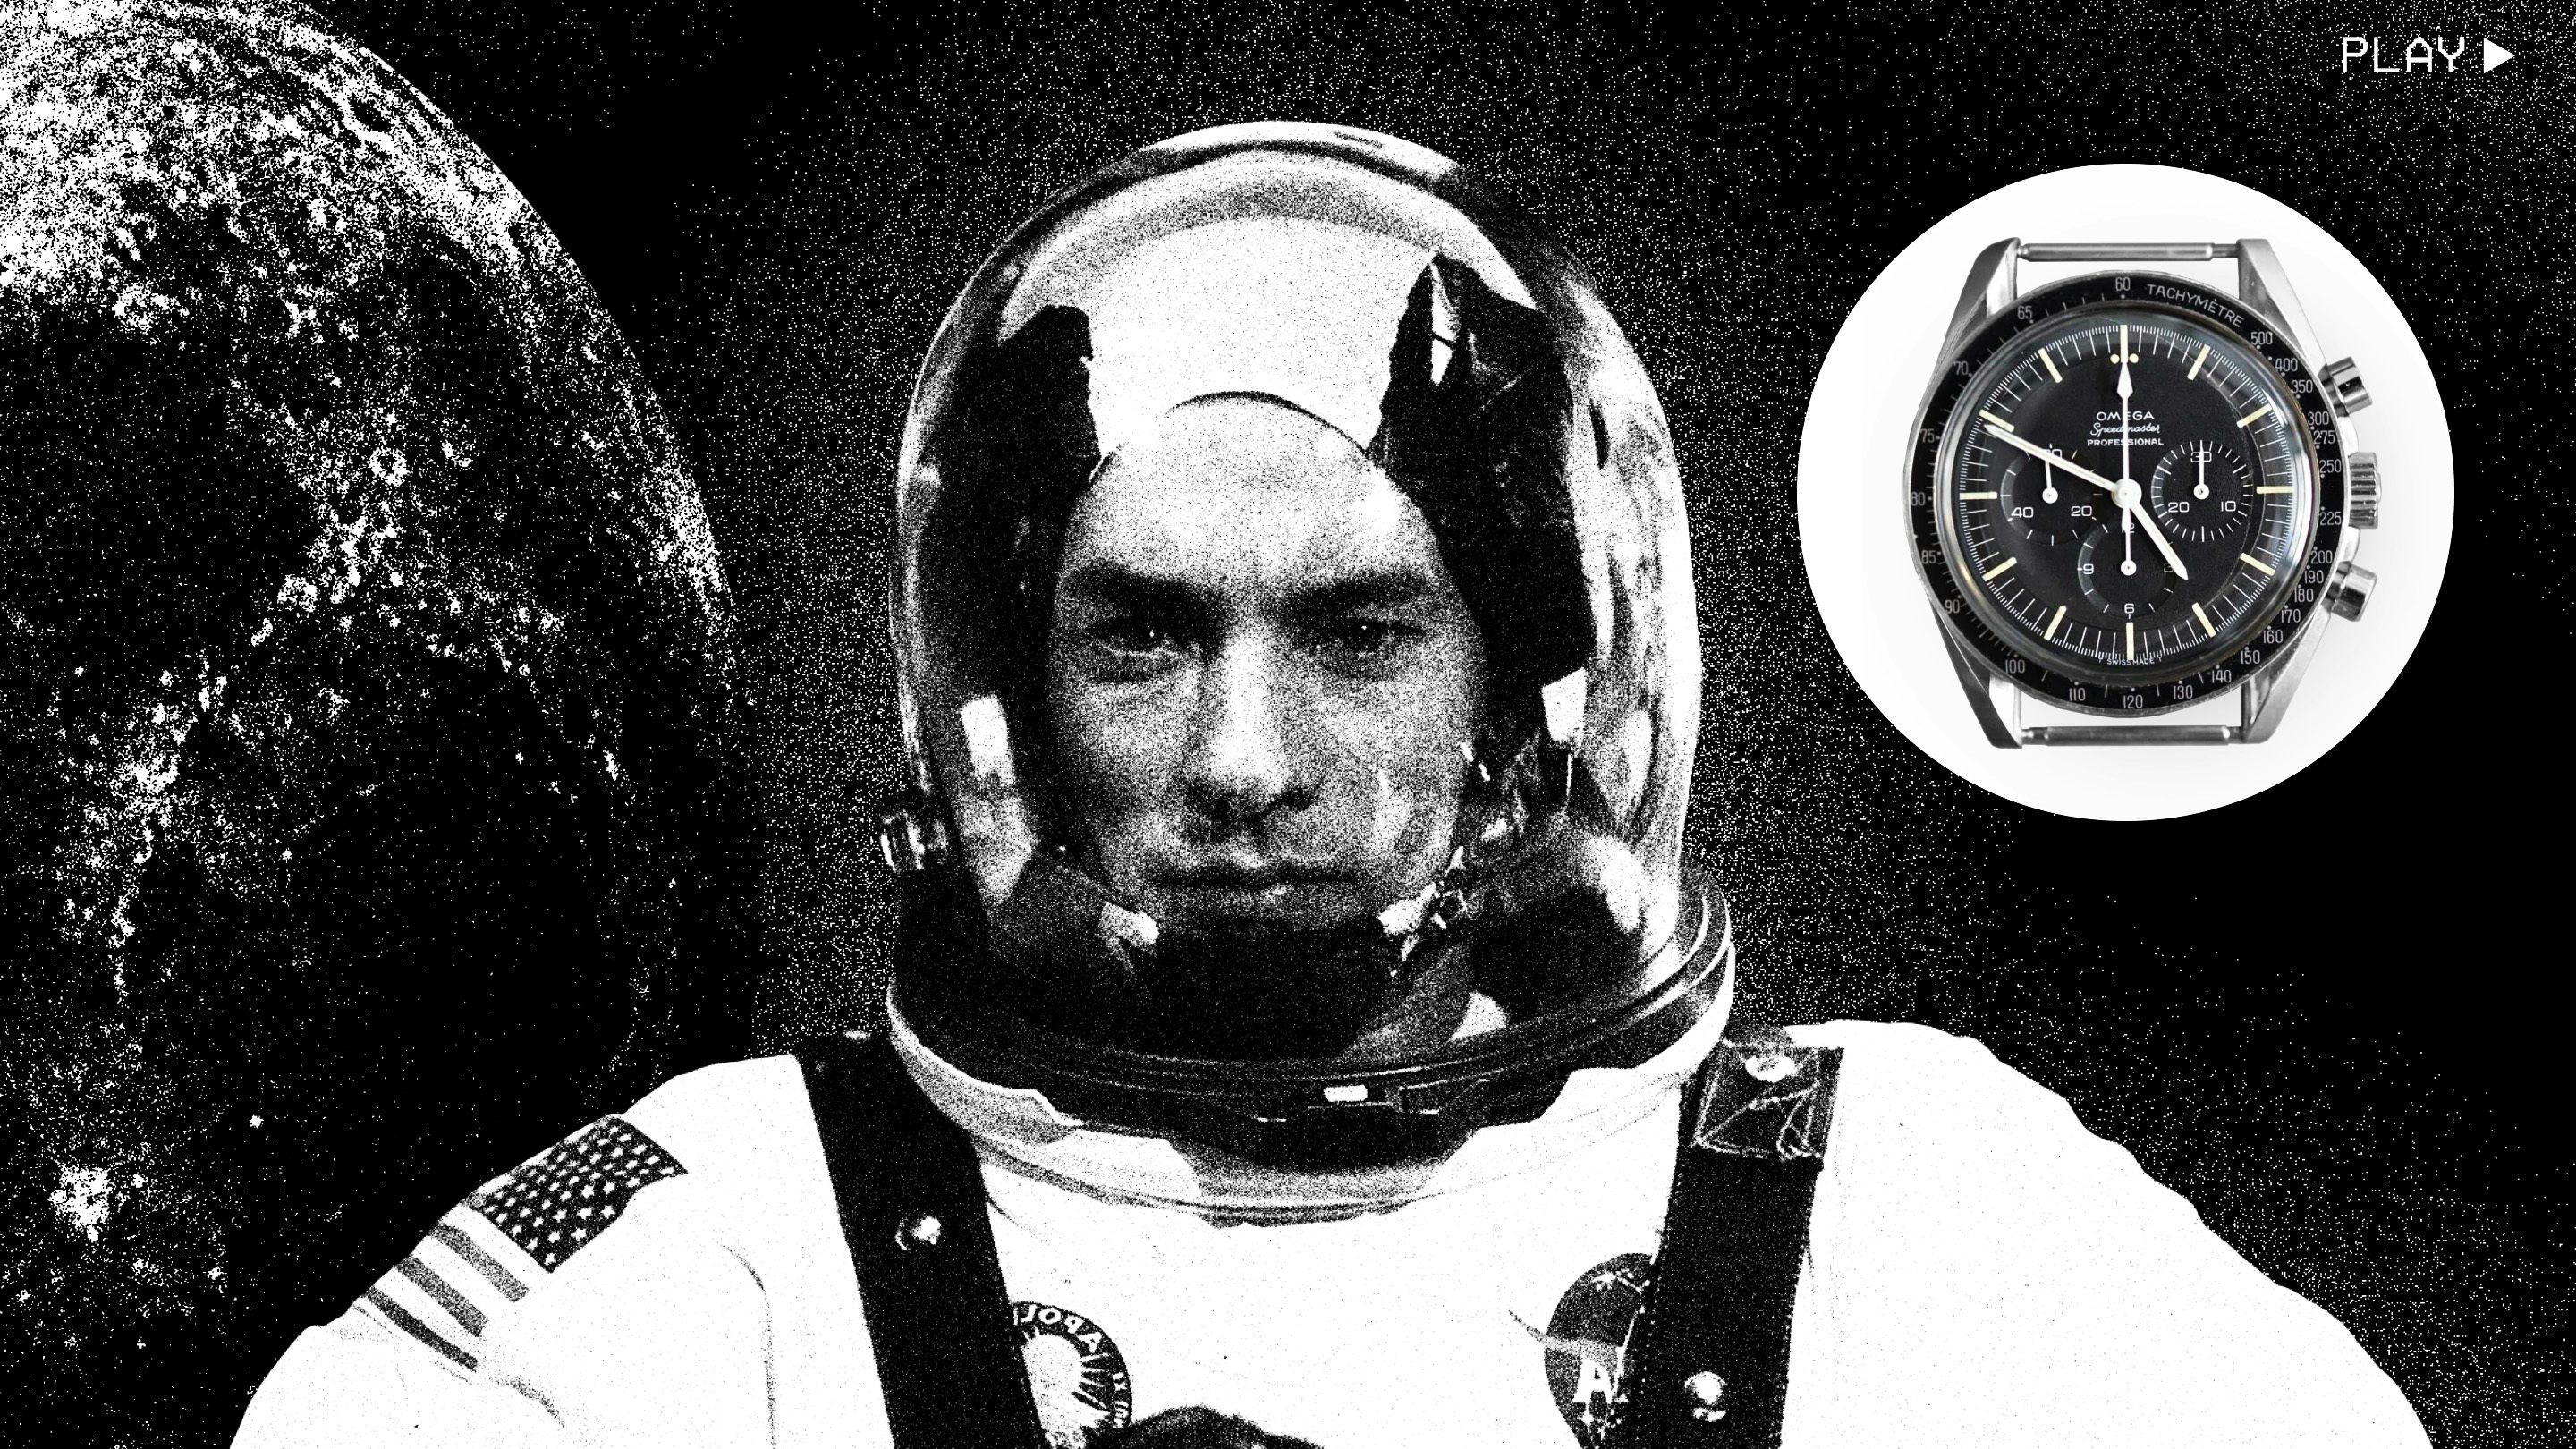 Tom Hanks Wore This Iconic Omega Speedmaster In 'Apollo 13